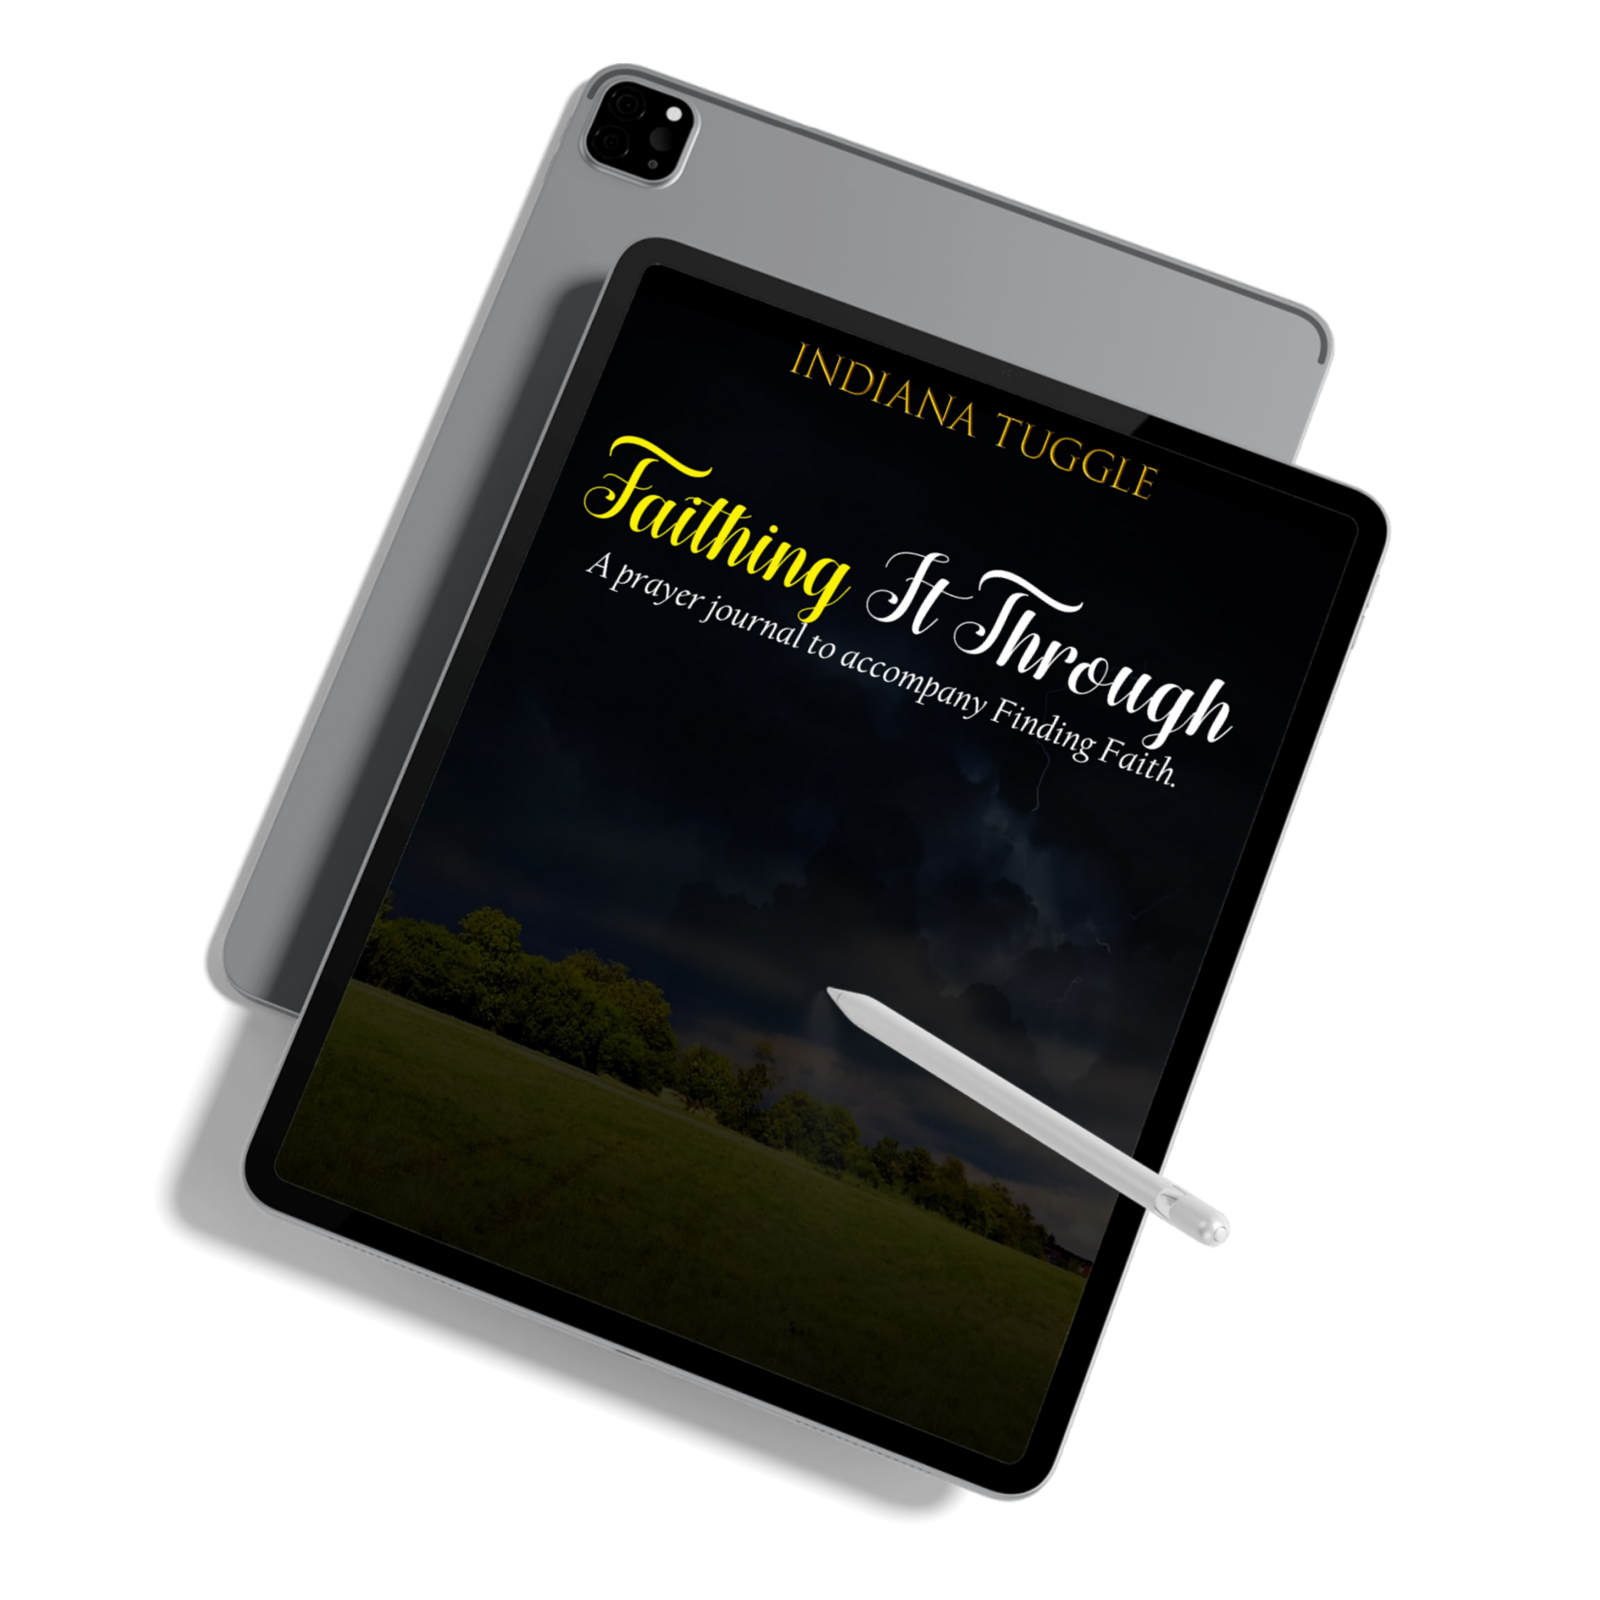 Faithing It Through: A Prayer Journal to Accompany Finding Faith